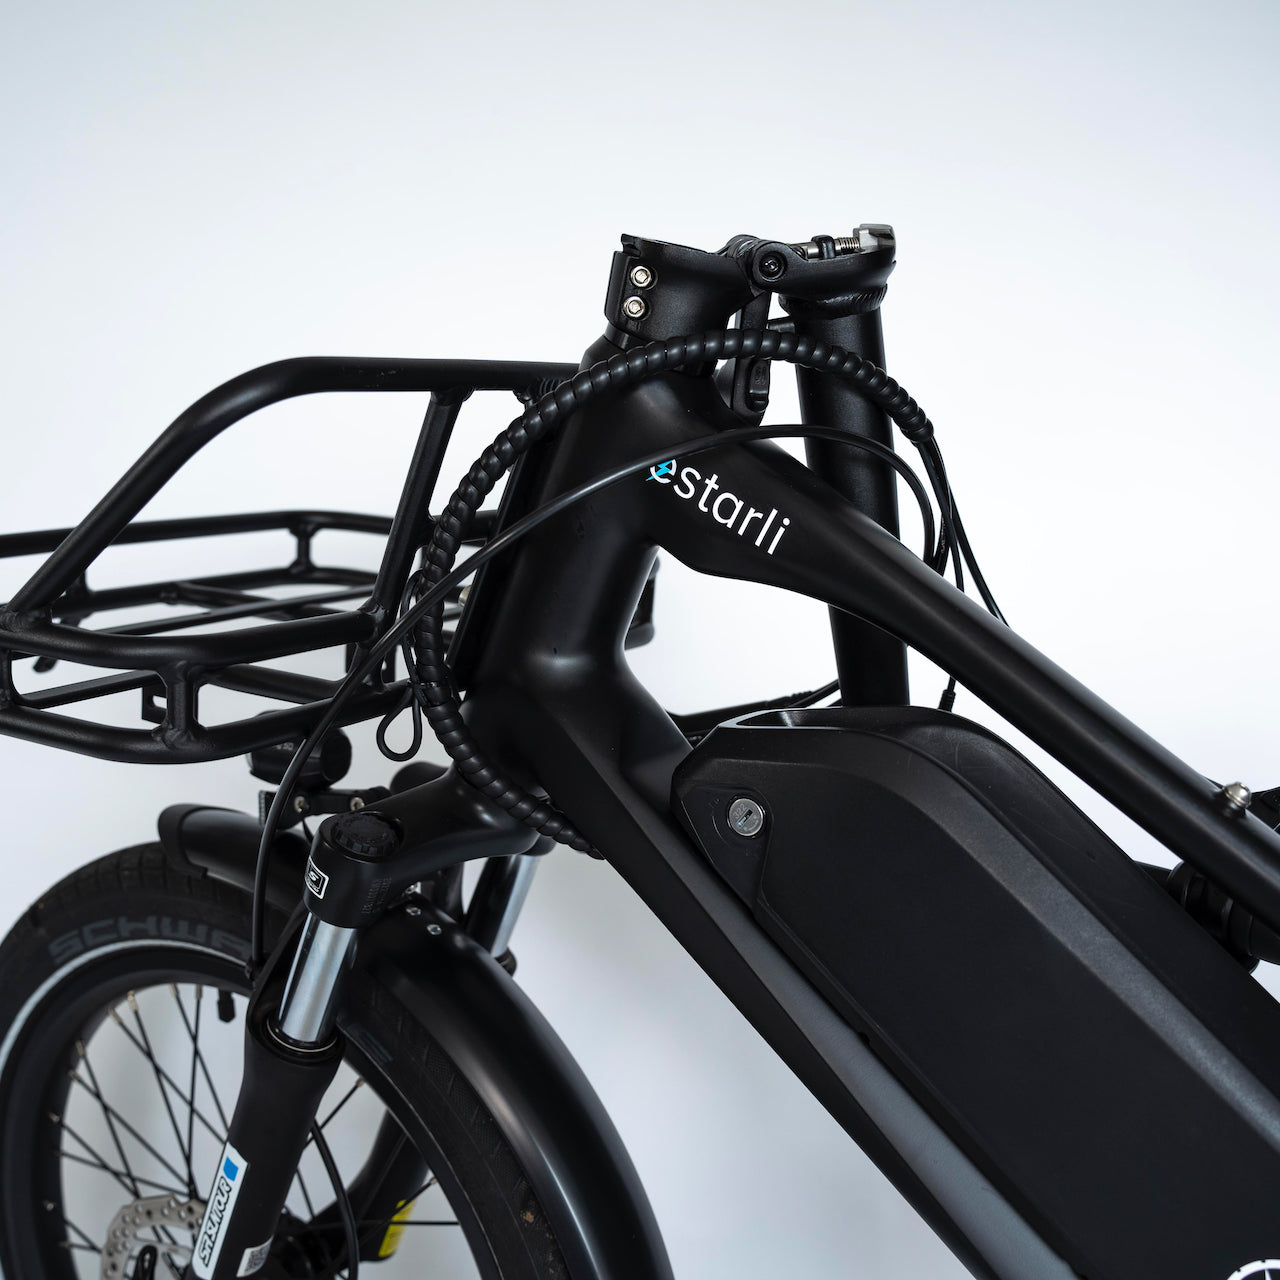 Estarli e-cargo electric bike folding handle bars